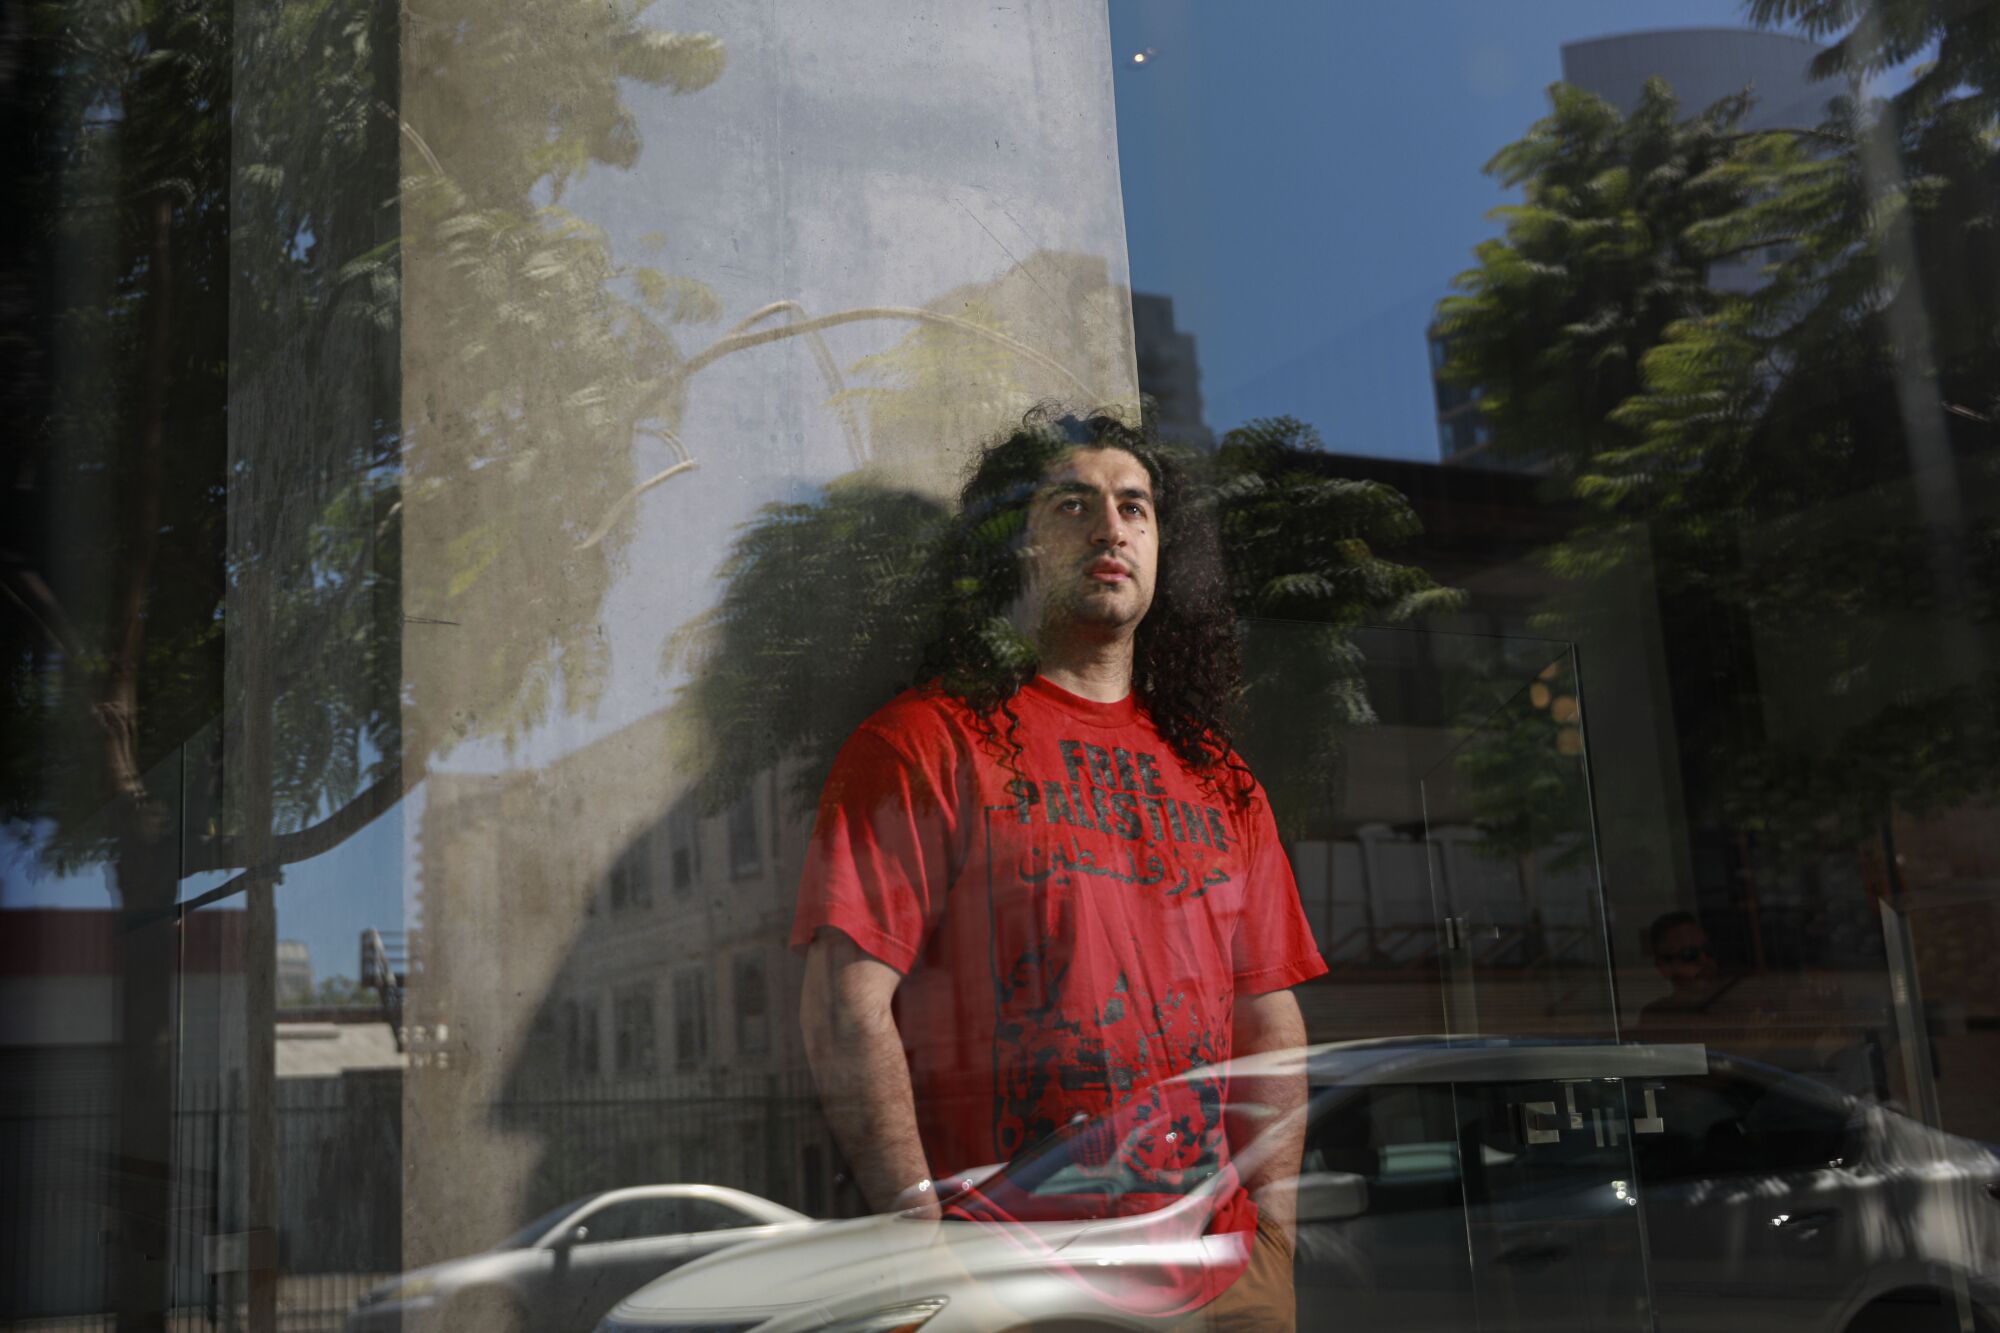 Ali-Reza Torabi stands in downtown San Diego